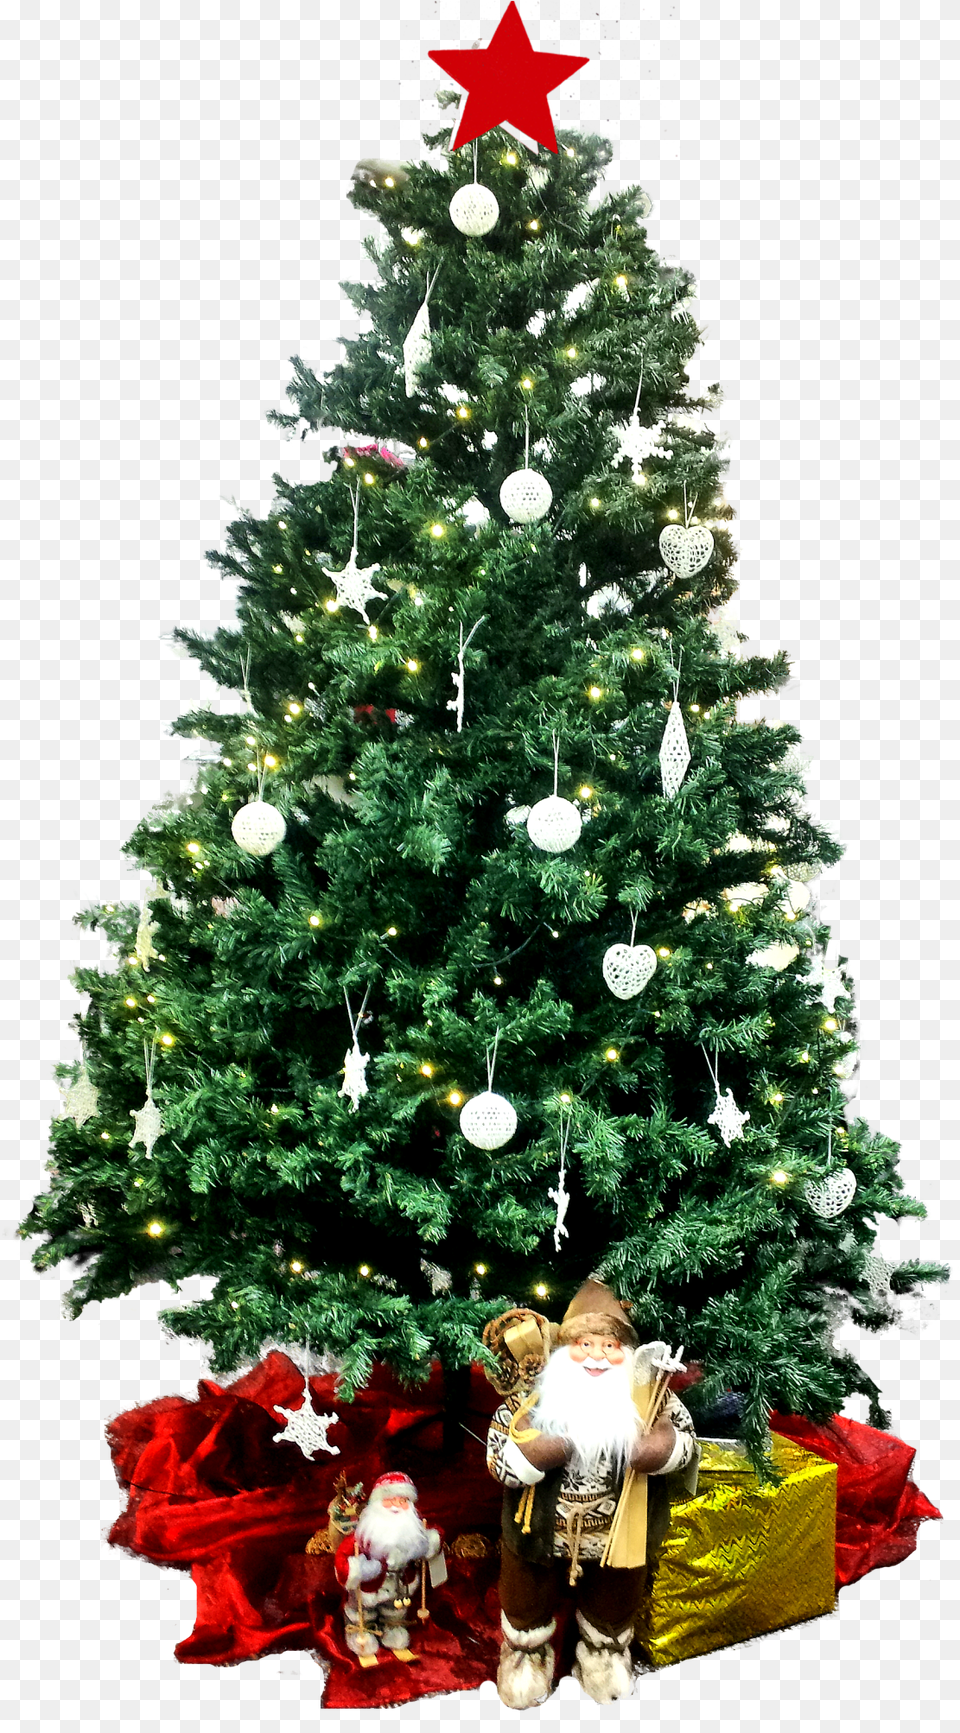 Images Clipart Photos Gratuites Libres De Droits Creative Christmas Eve Greeting, Tree, Plant, Person, Fir Png